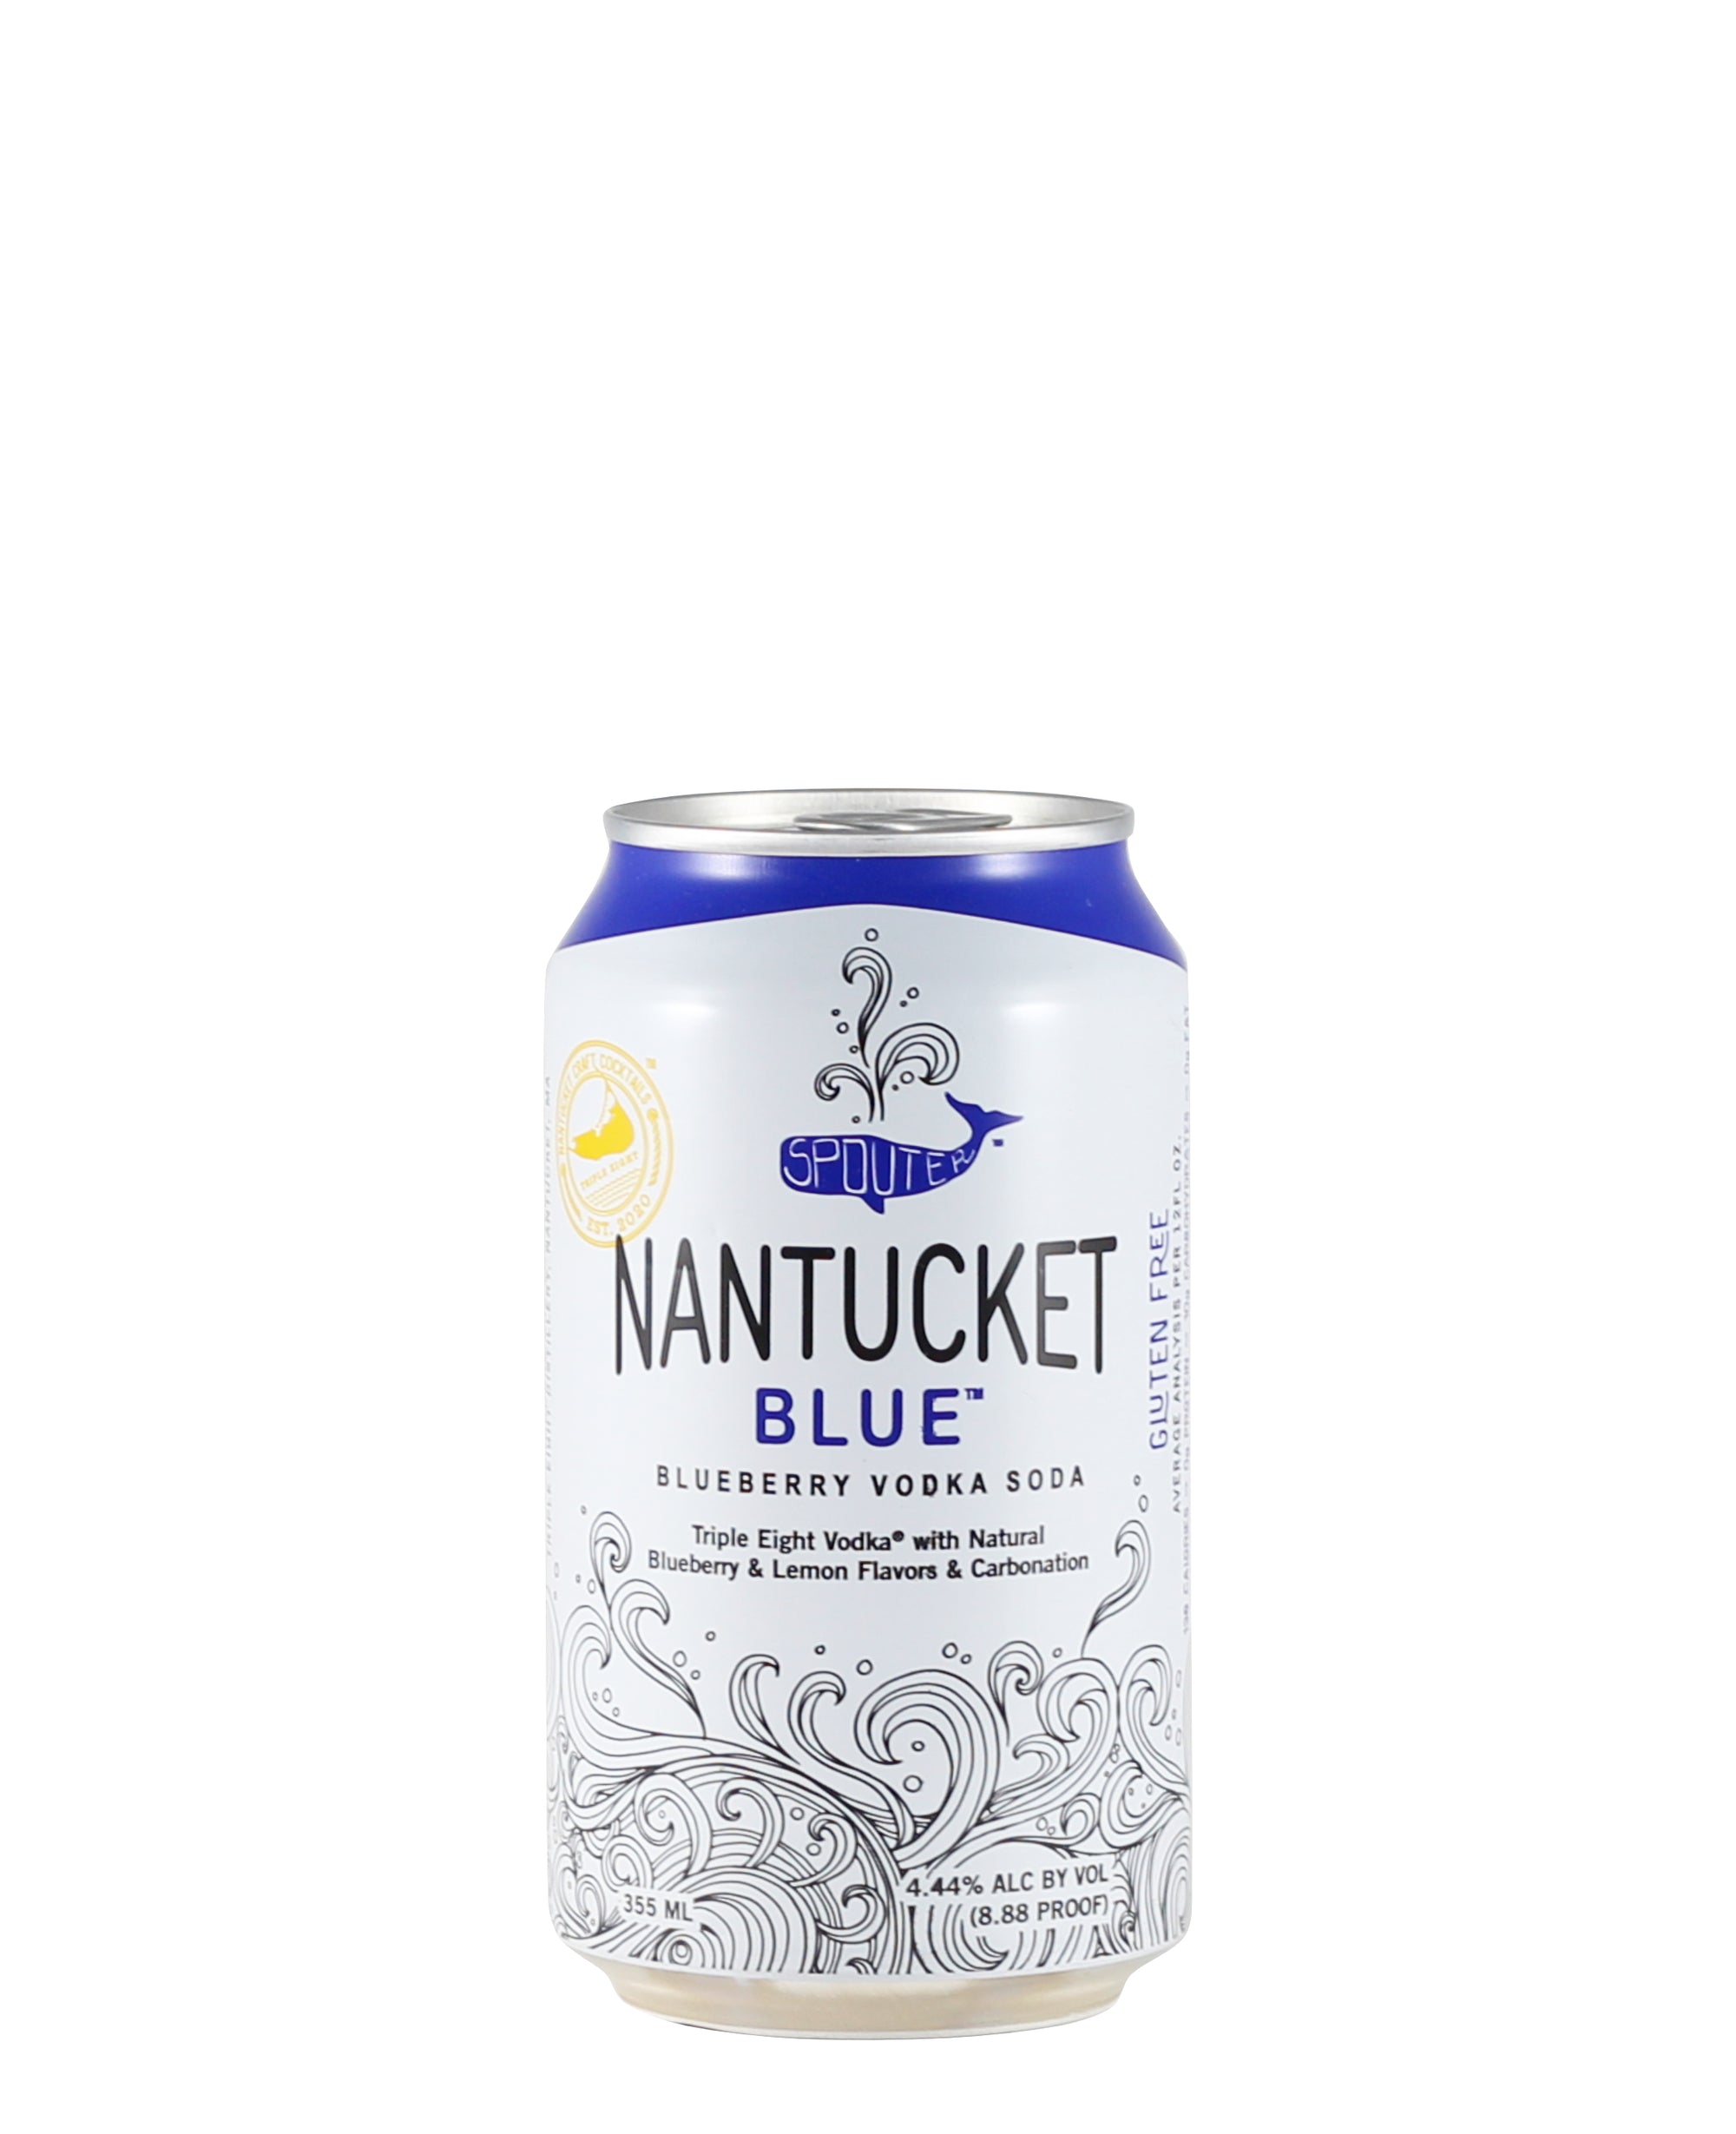 Nantucket Blueberry Vodka Soda Canned Cocktails (Nantucket, MA)